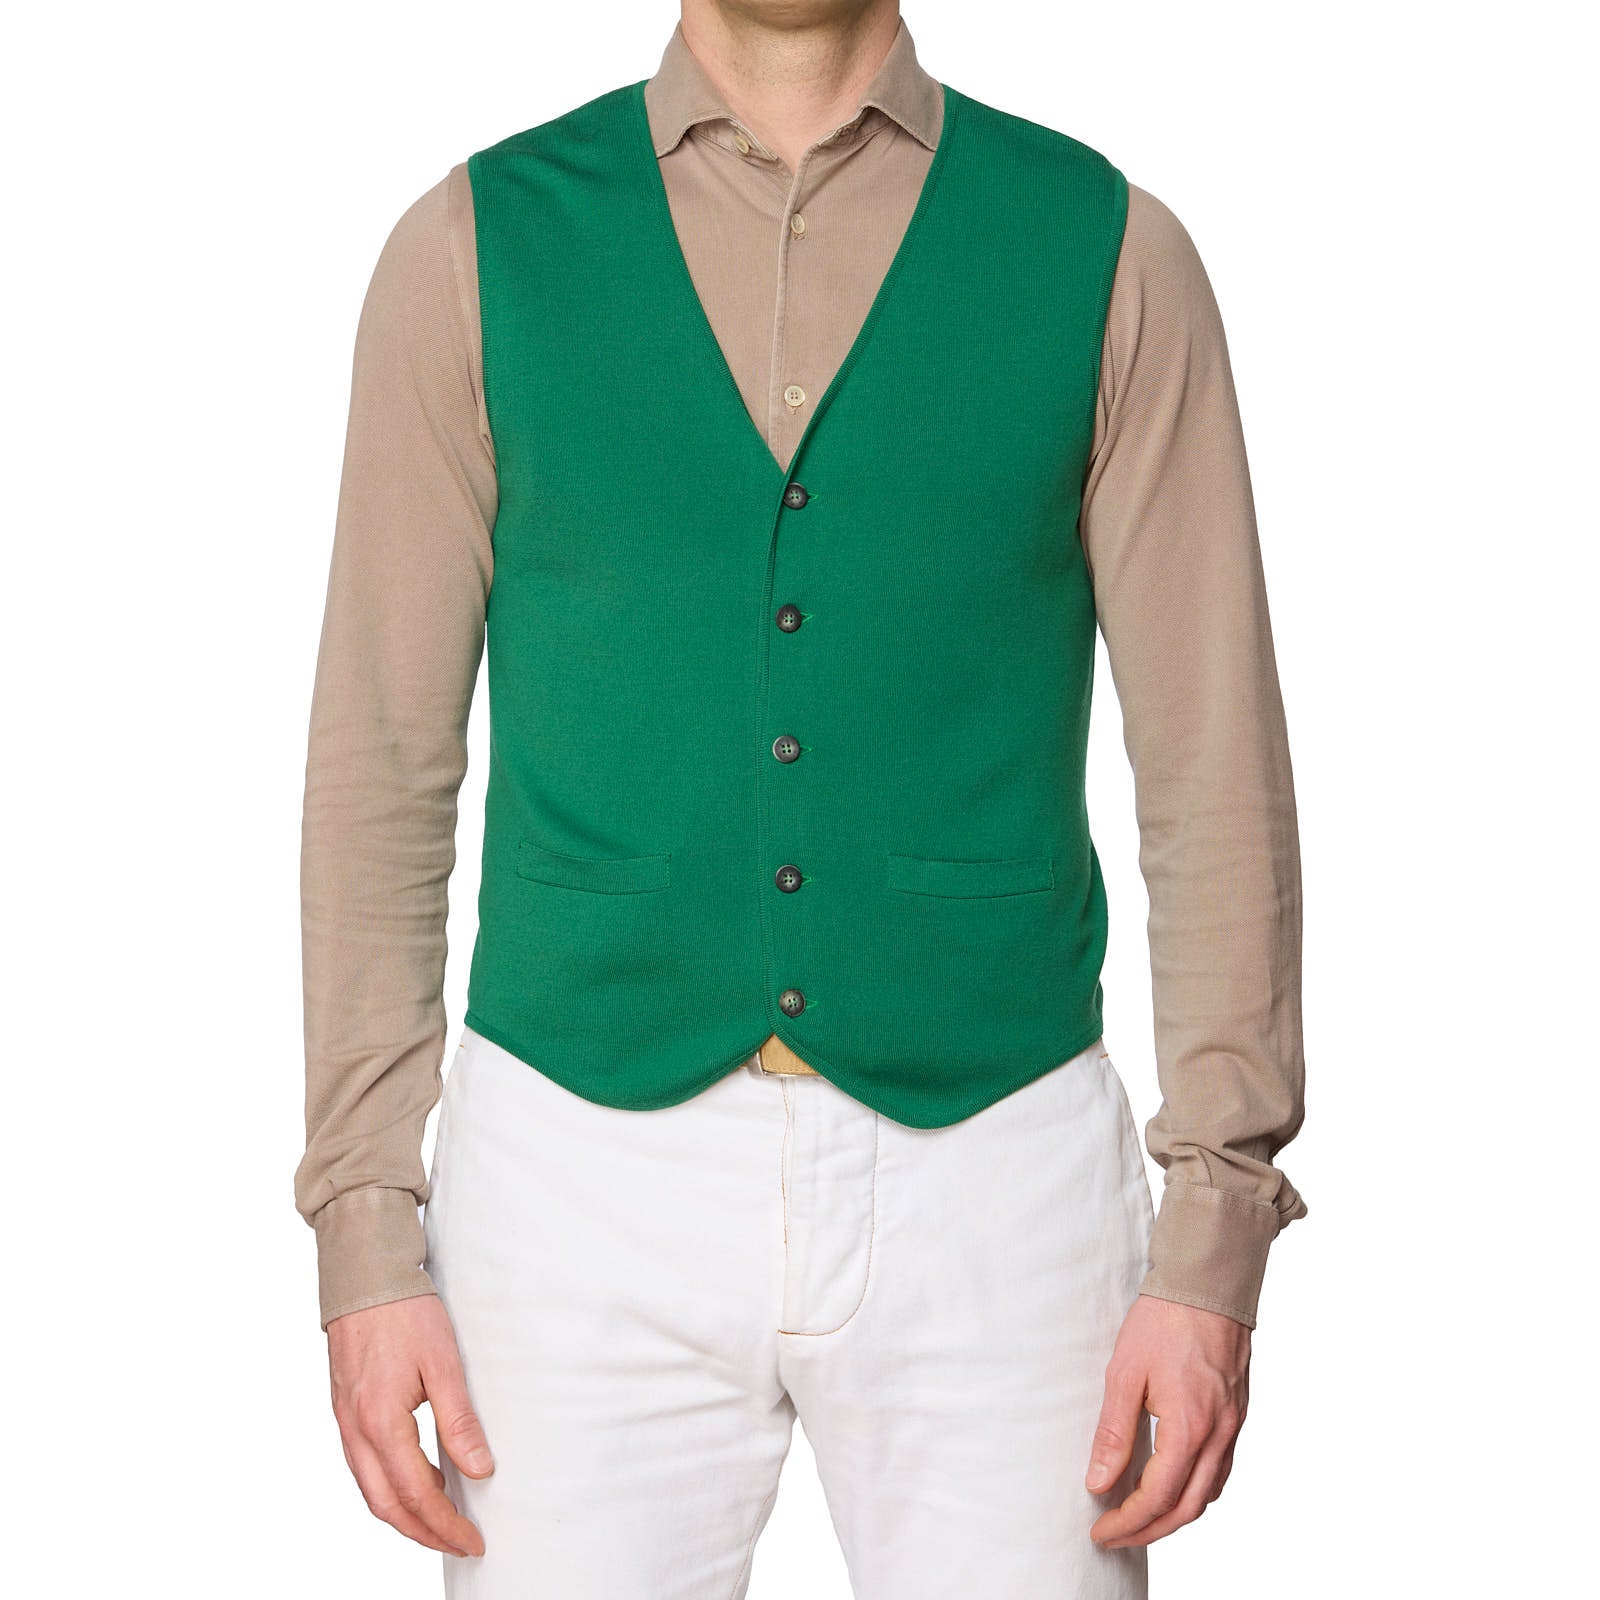 ONES Green Wool Knit 5 Button Vest Waistcoat EU 50 NEW US M